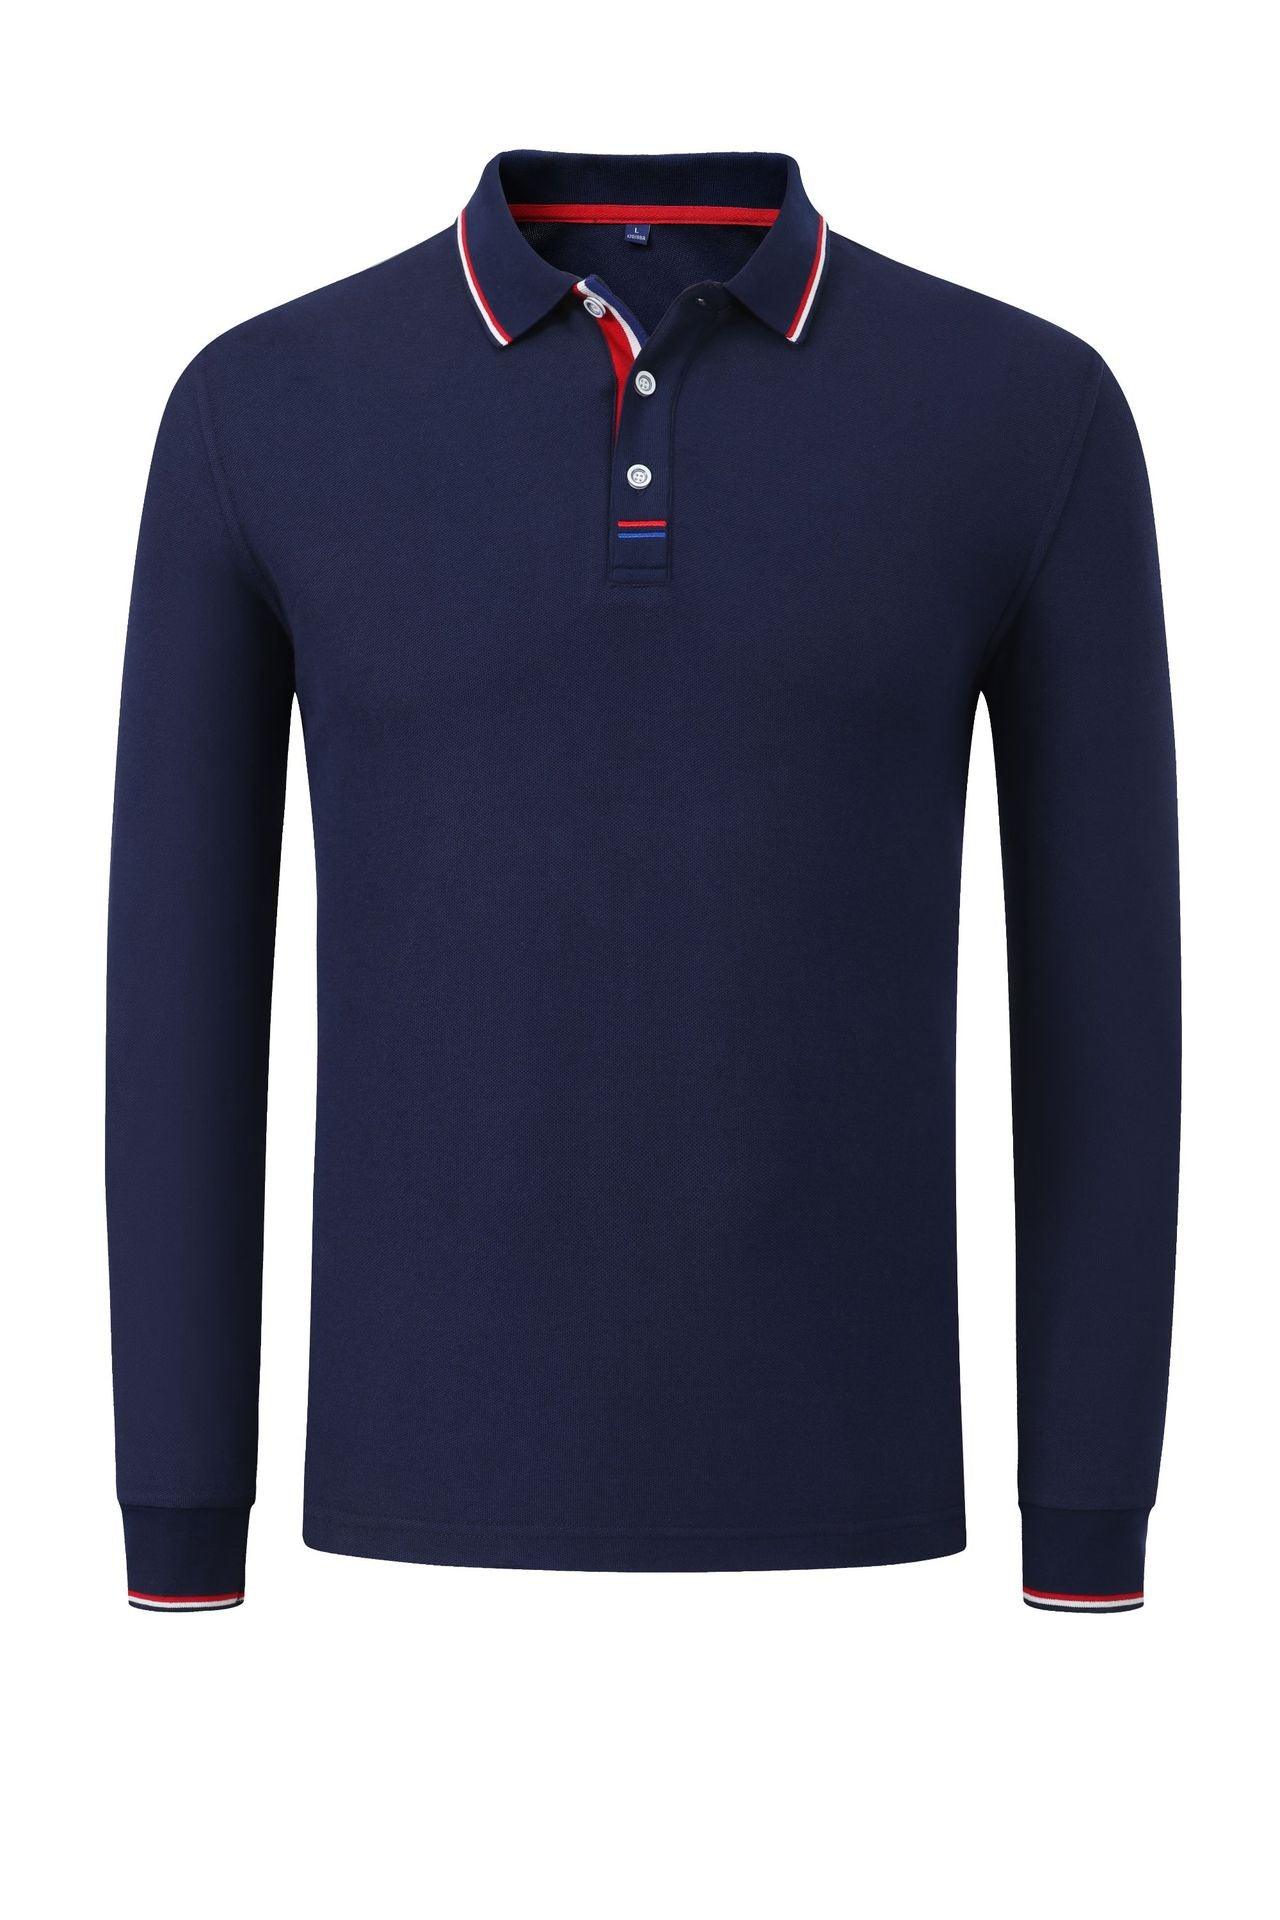 Copper Ammonia Cotton Long Sleeve Polo Shirt - Maves Apparel